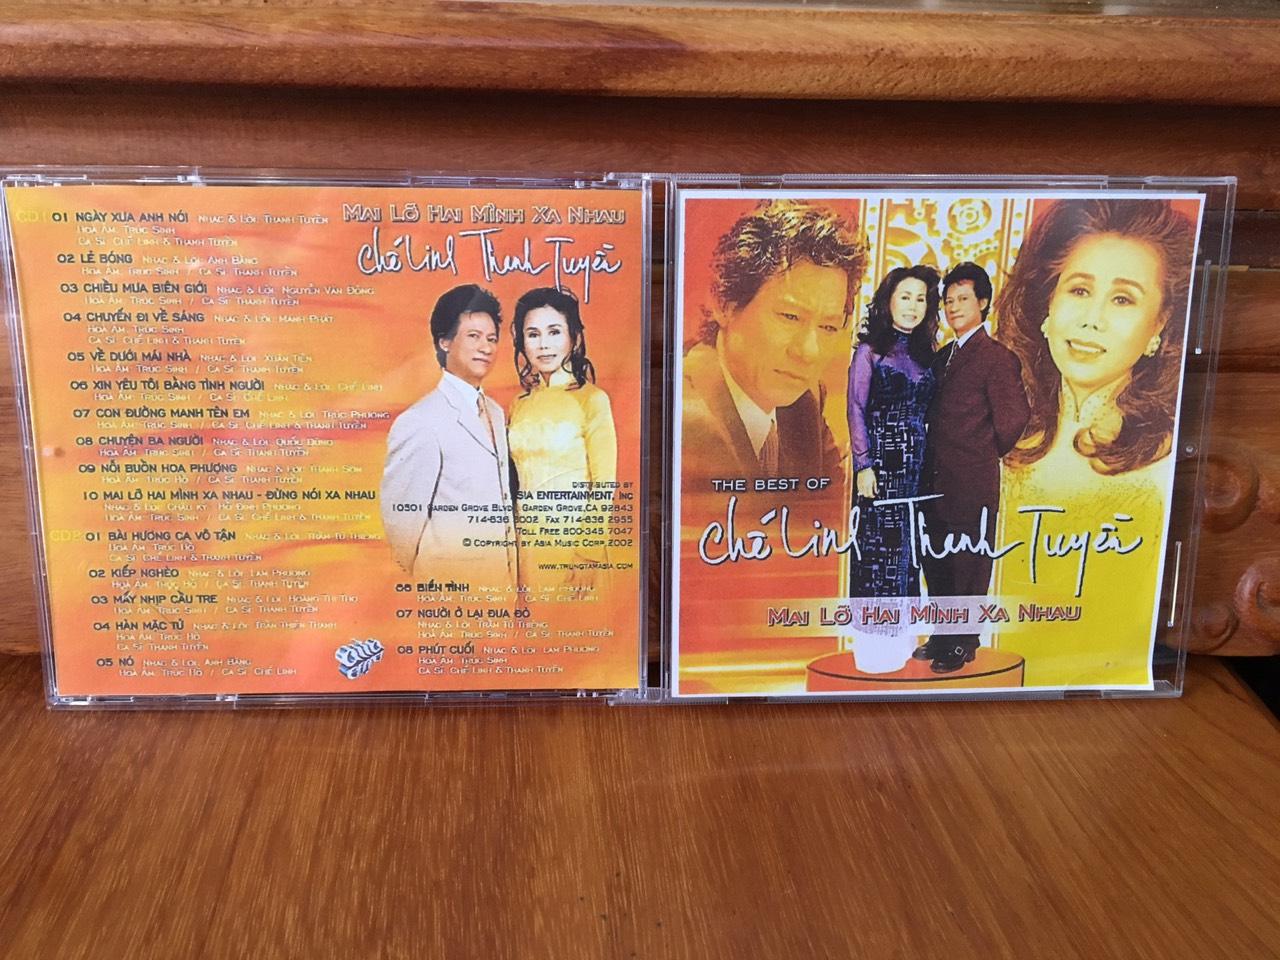 [MDCD] Bộ 2 đĩa CD Song Ca Chế Linh Thanh Tuyền - Mai lỡ hai mình xa nhau